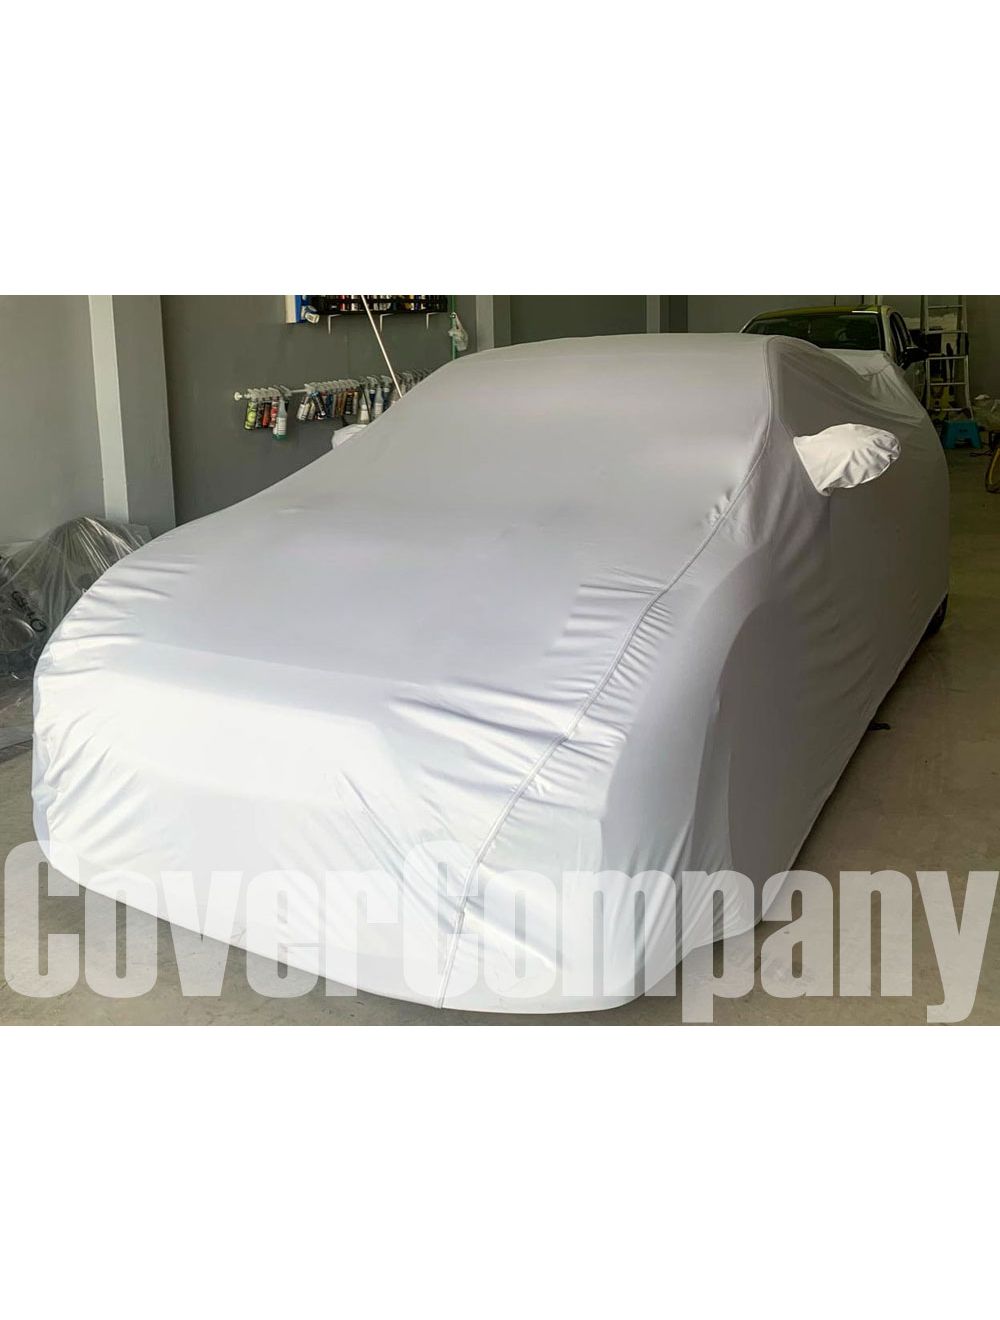 Custom Rainproof Nissan Car Cover - Outdoor Platinum Range